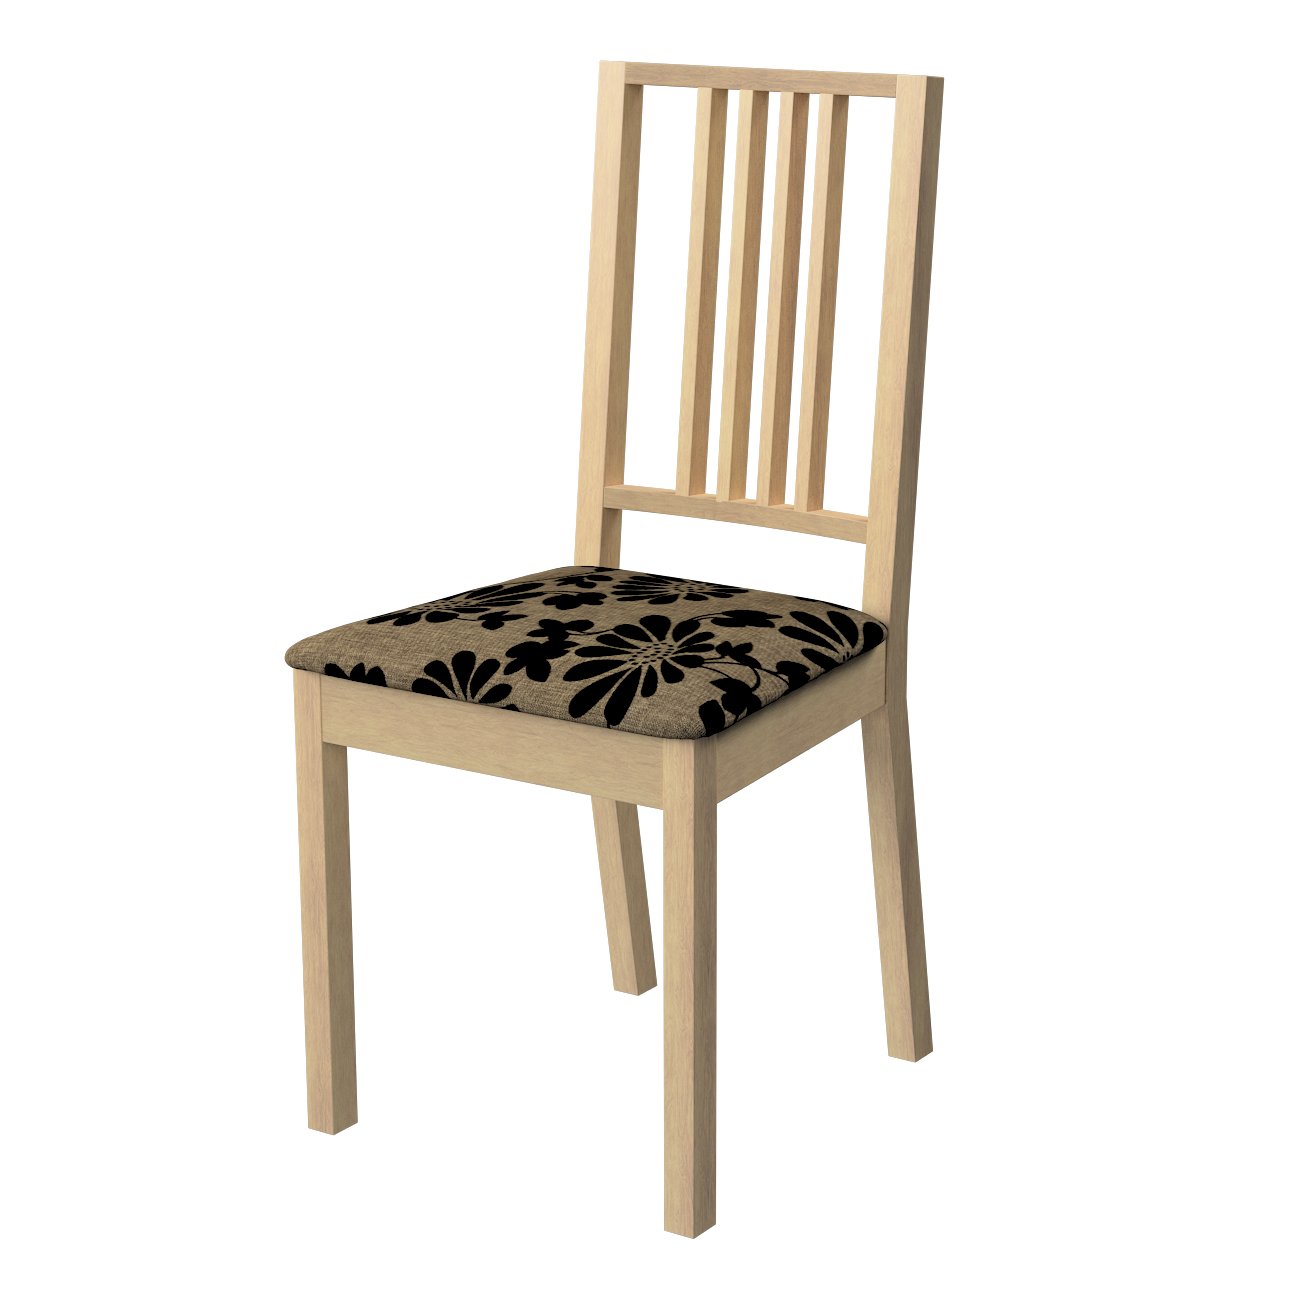 Dekoria Potah na sedák židle Börje, béžová a černá, potah sedák židle Börje, Living II, 162-11